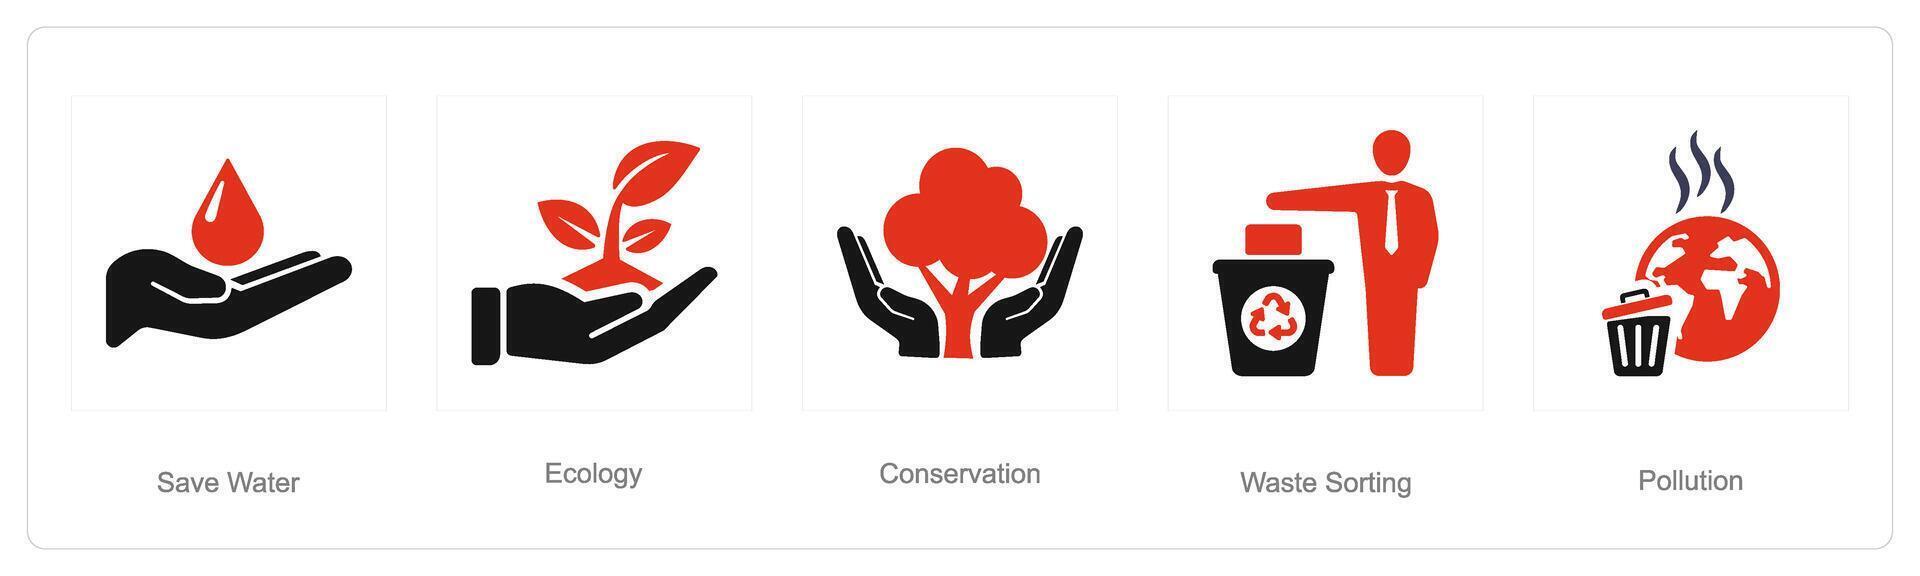 un conjunto de 5 5 ecología íconos como salvar agua, ecología, conservación vector